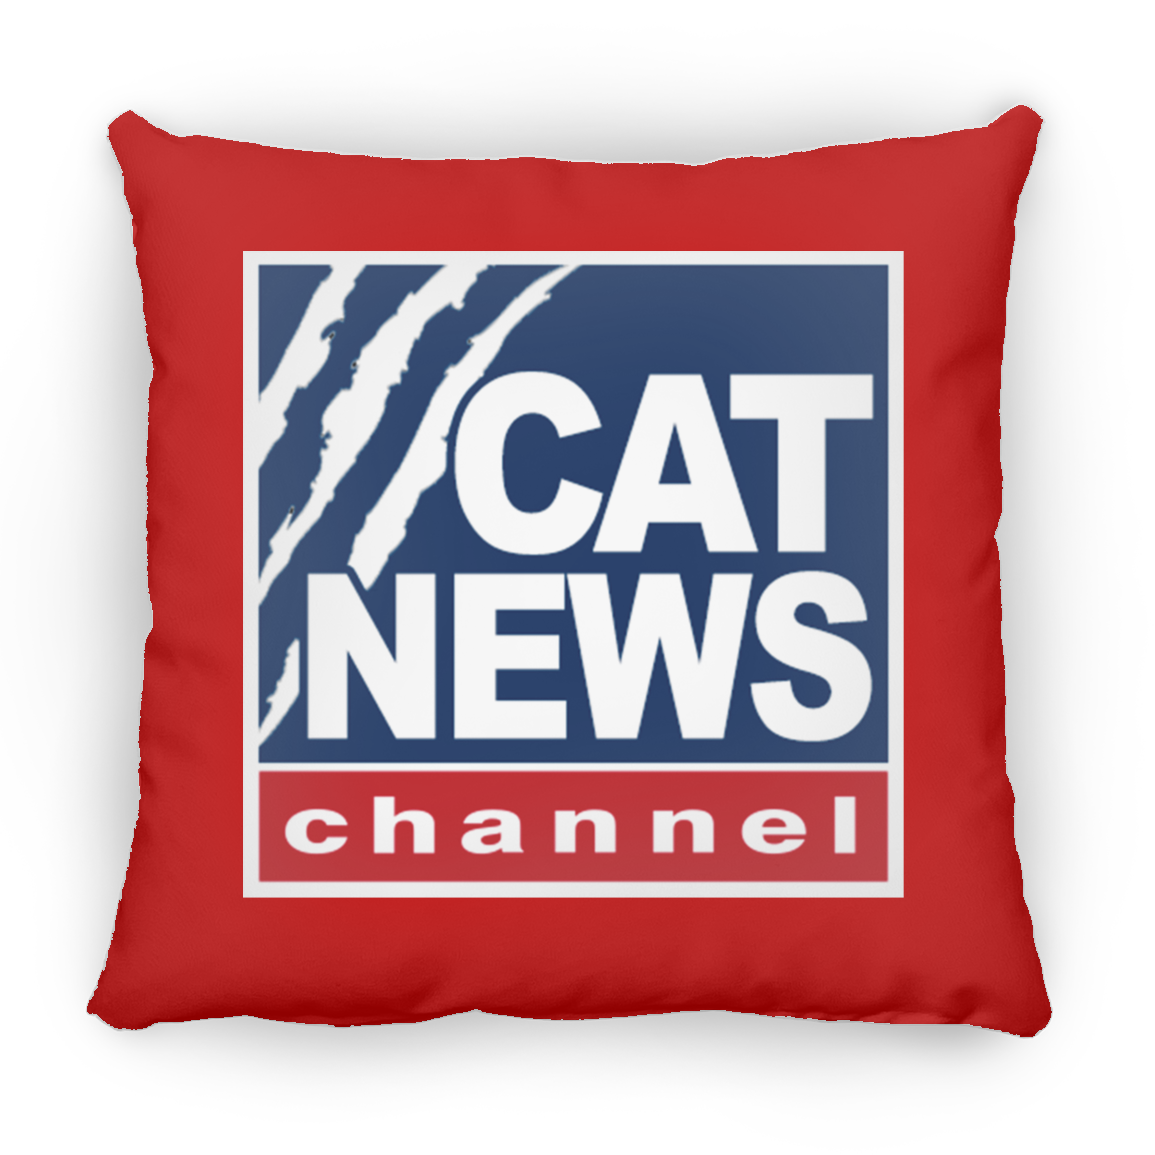 "Cat News" Large Square Pillow